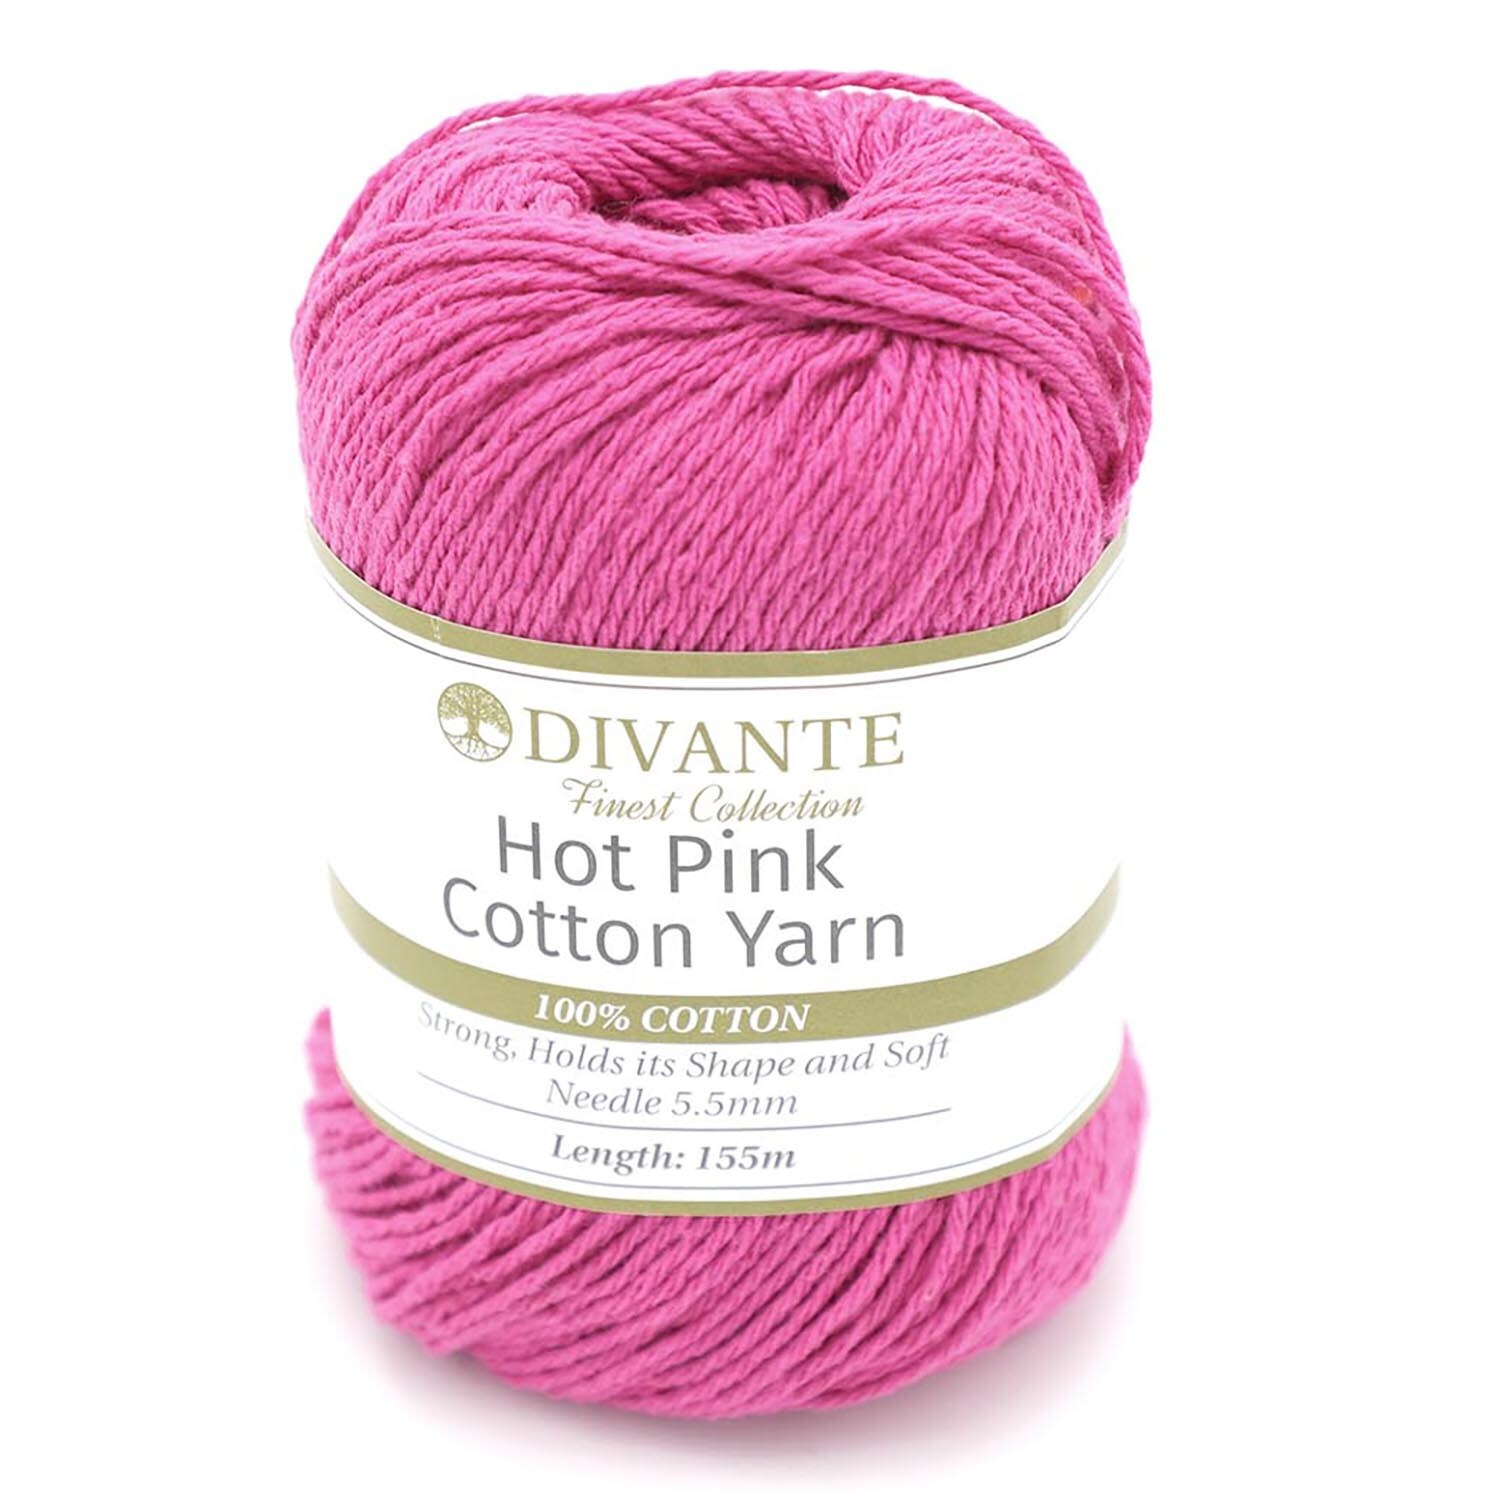 Divante Hot Pink Cotton Yarn 155m Image